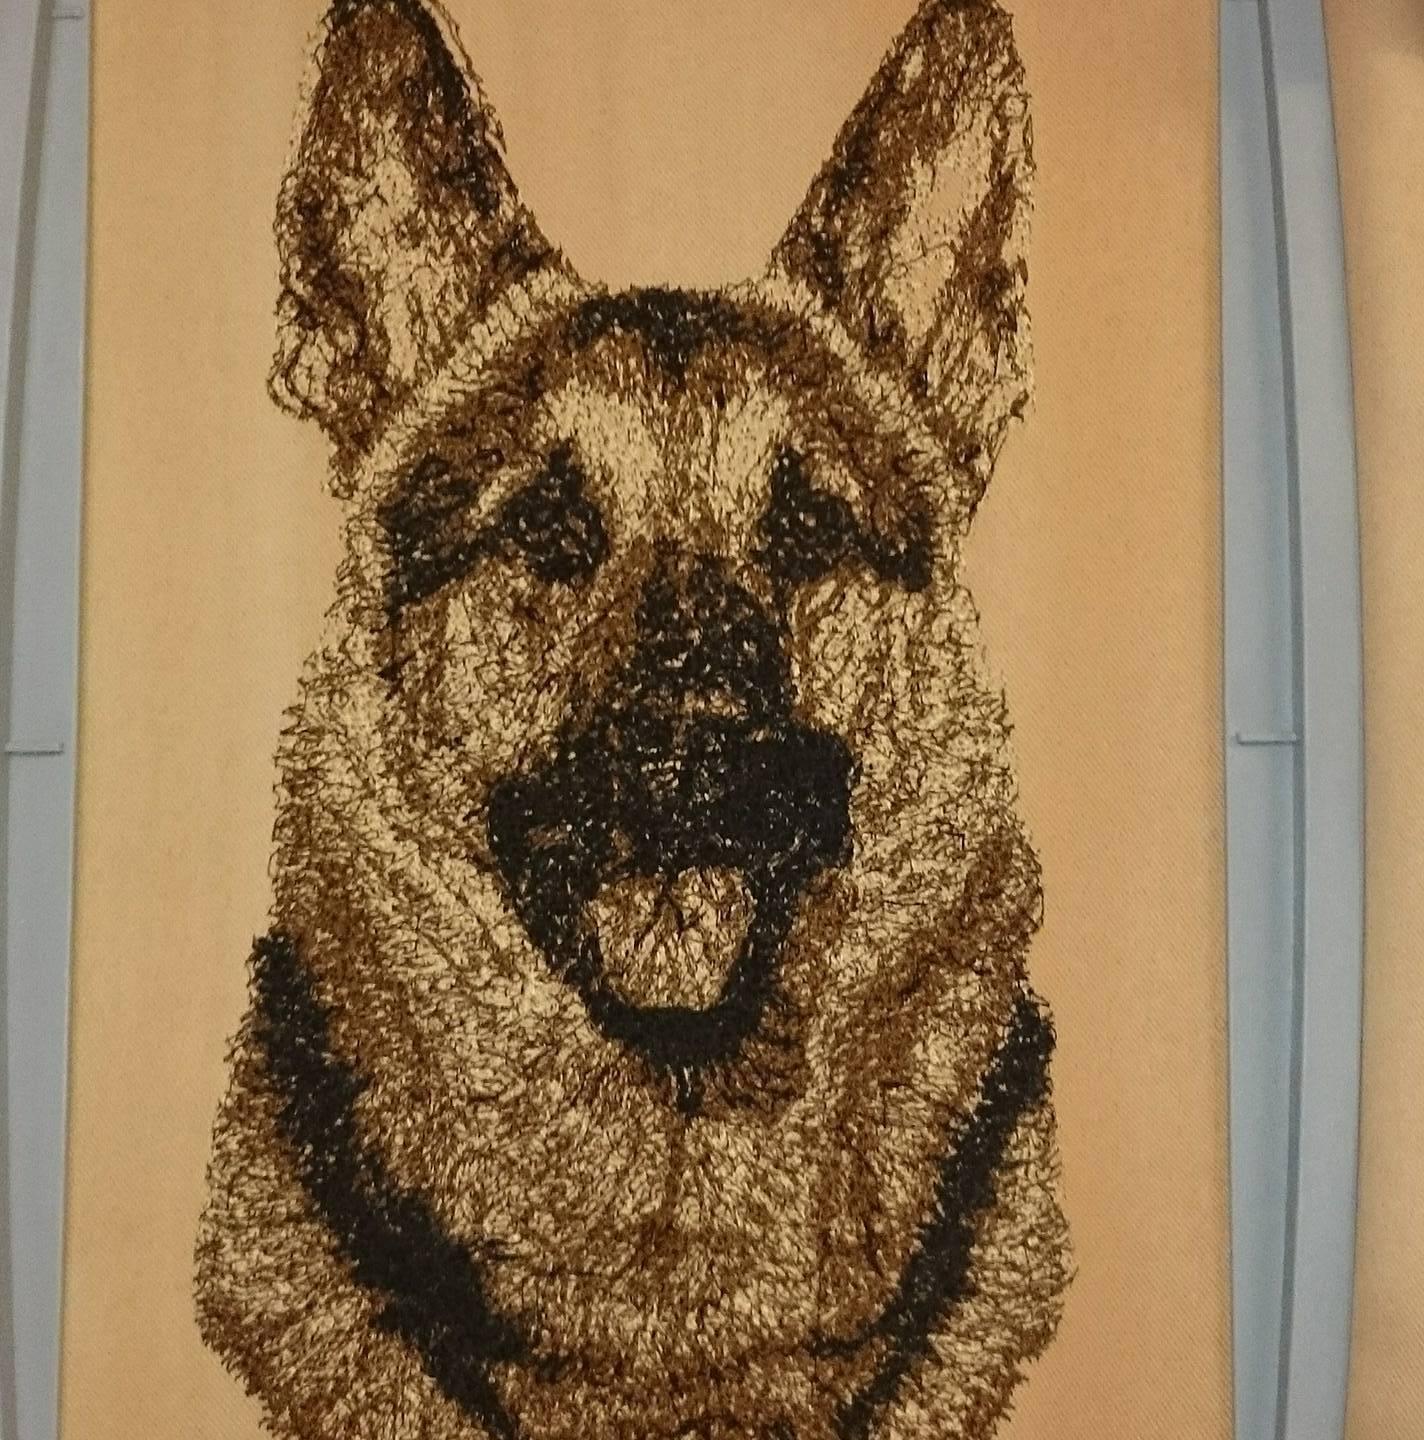 German Shepherd photo stitch free embroidery